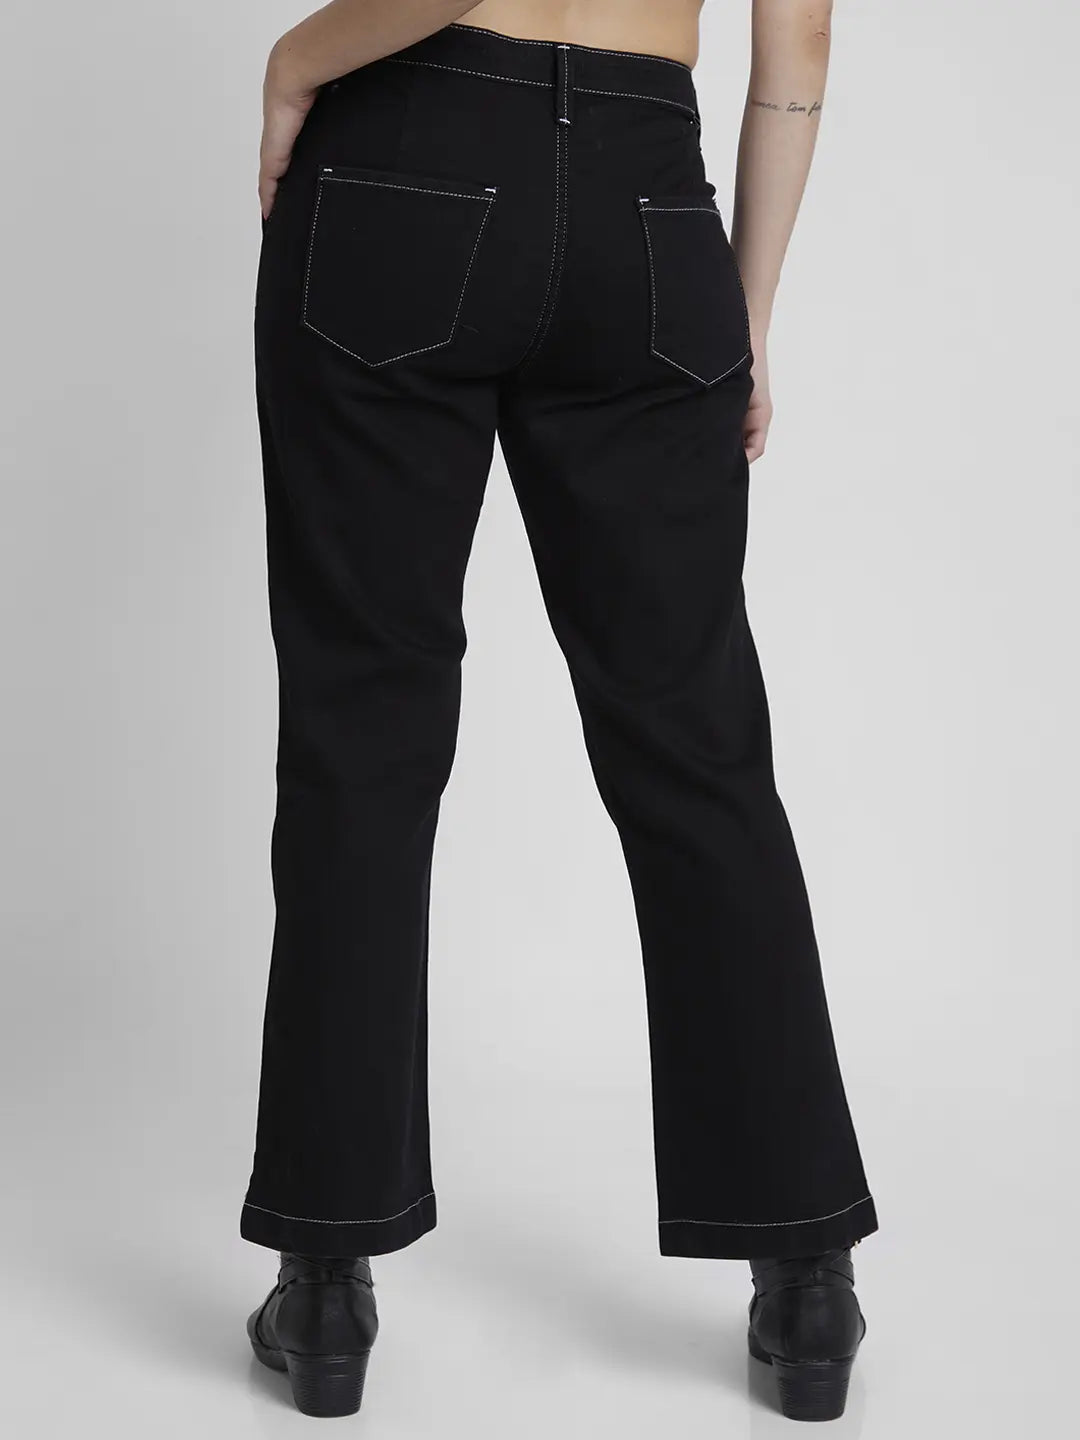 Shop Black Ankle Length Jeans for Women Online - Spykar